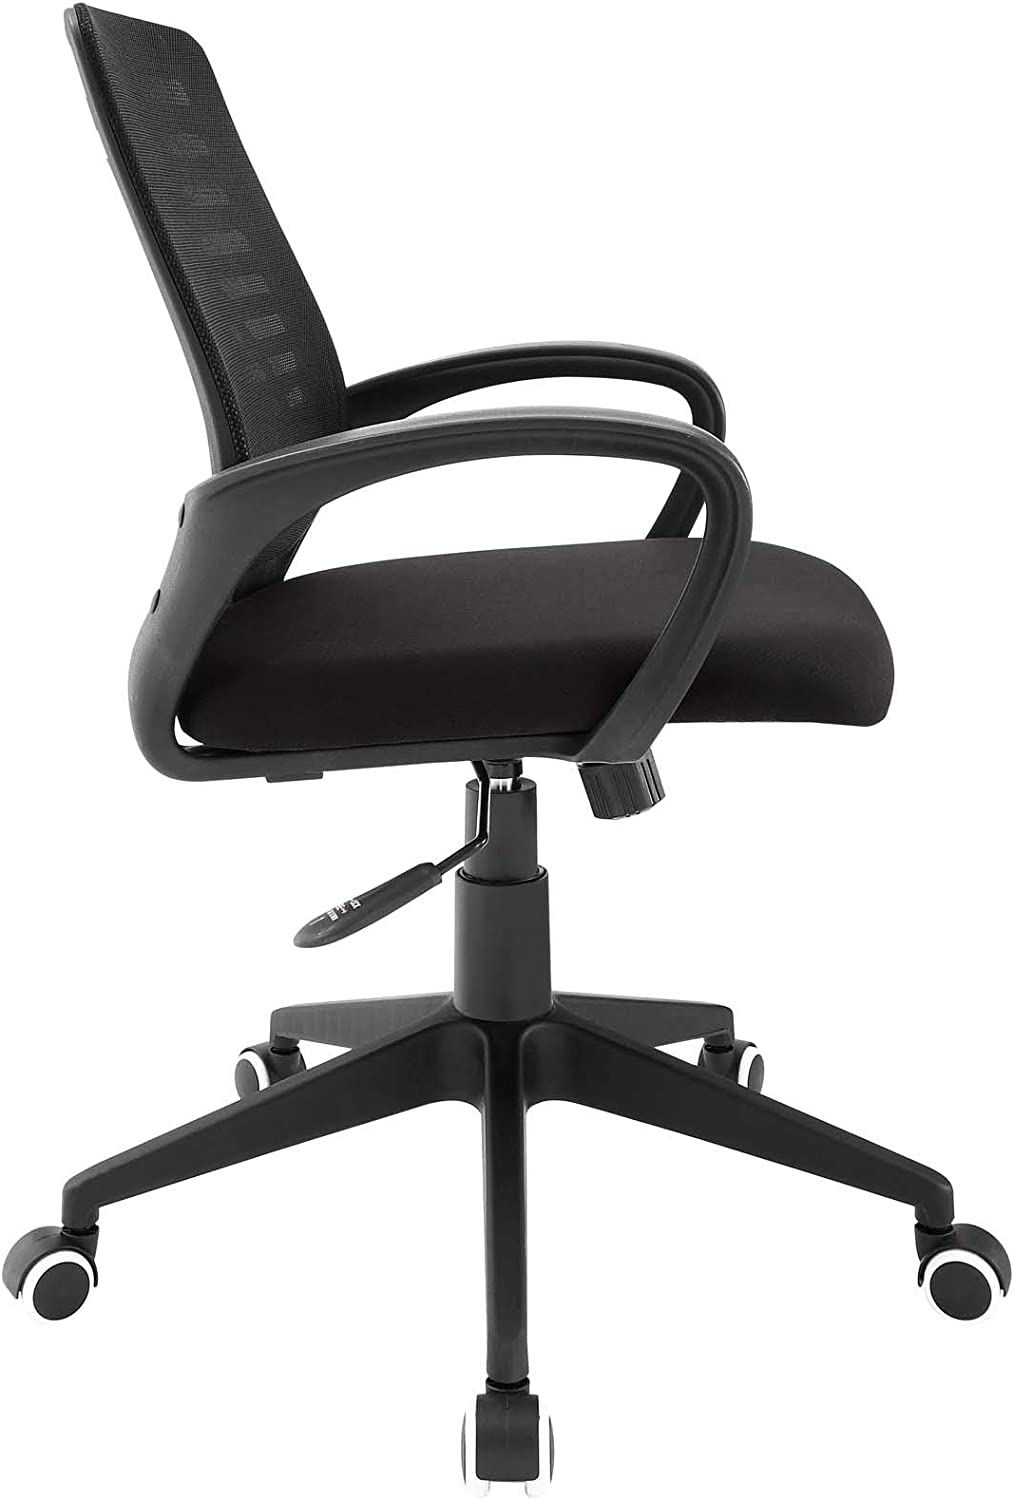 Modway Ardor Mesh Ergonomic Computer Desk Office Chair in Black